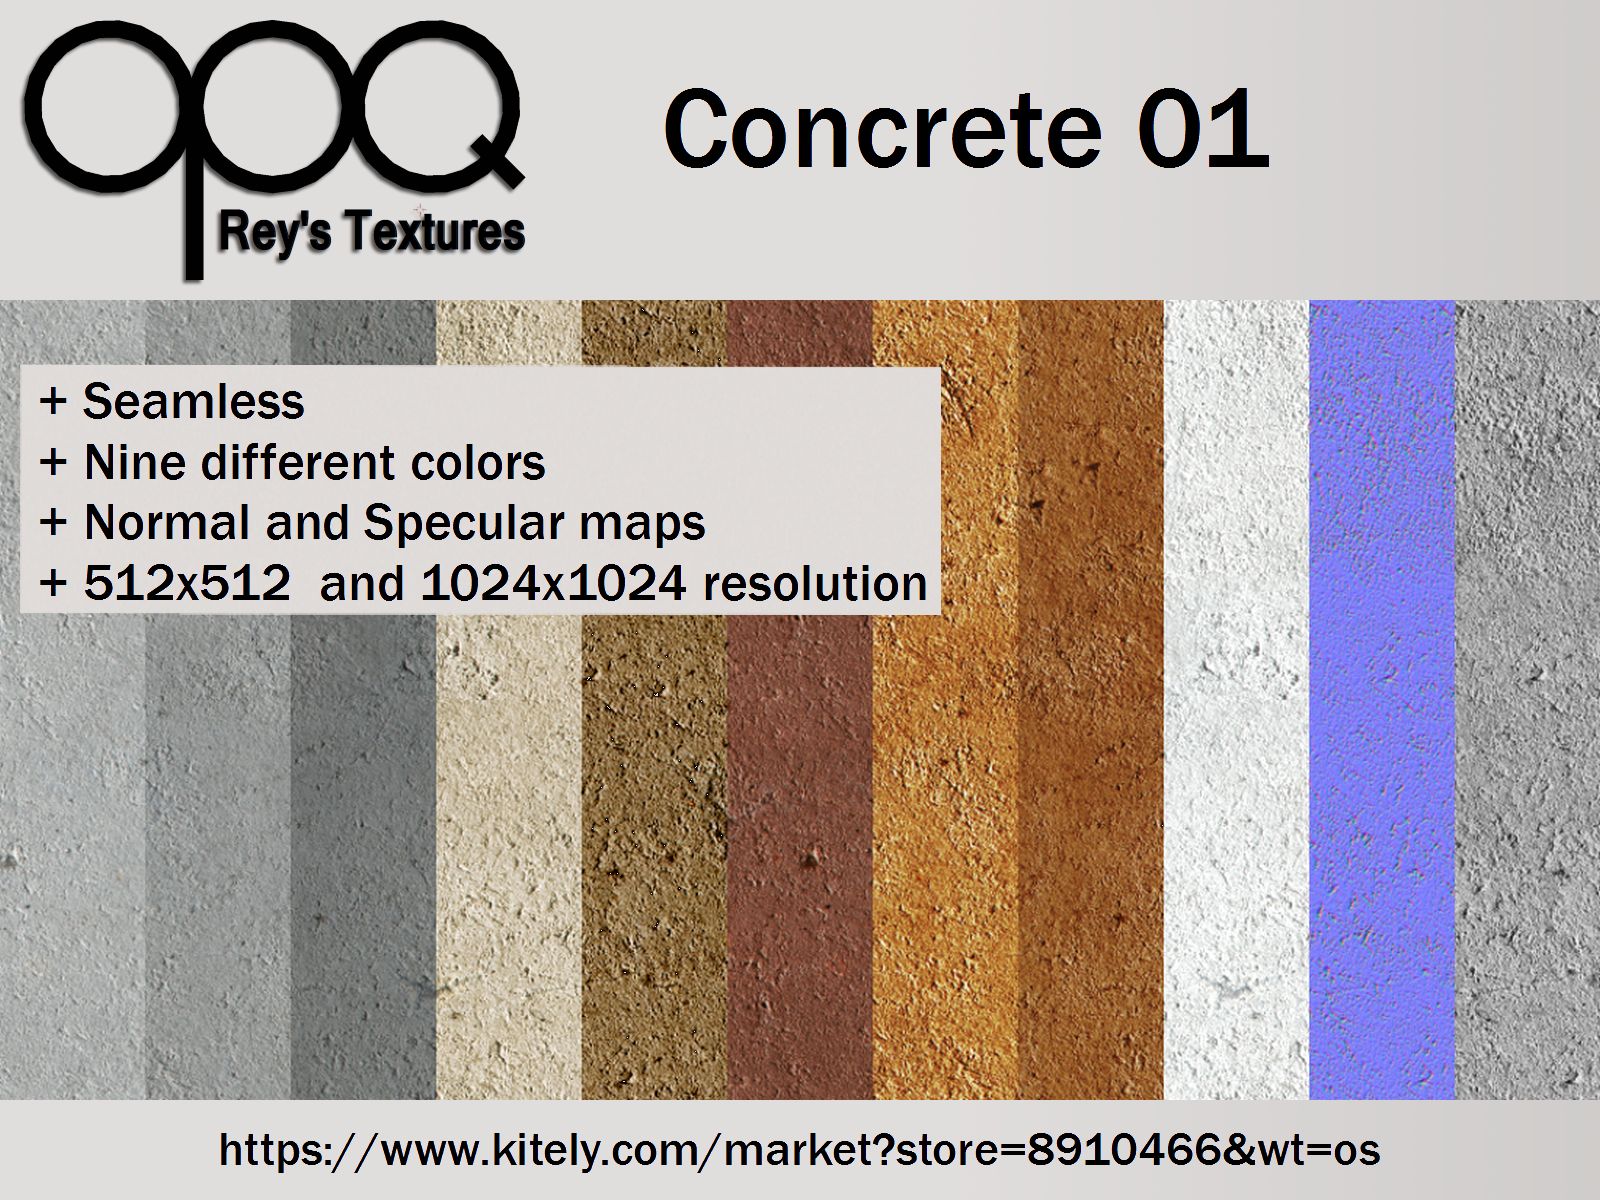 Rey's Concrete 01 Poster Kitely.jpg